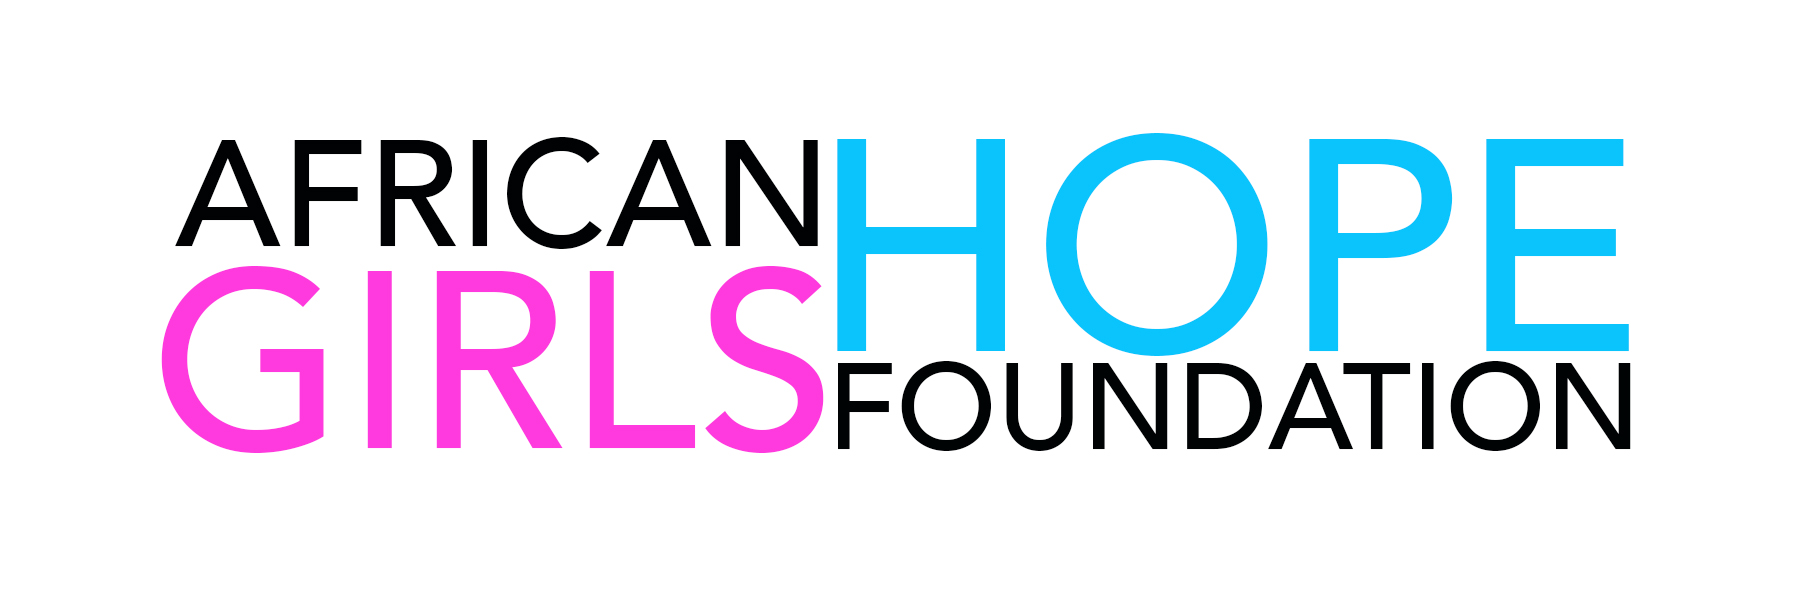 African Girls Hope Foundation logo